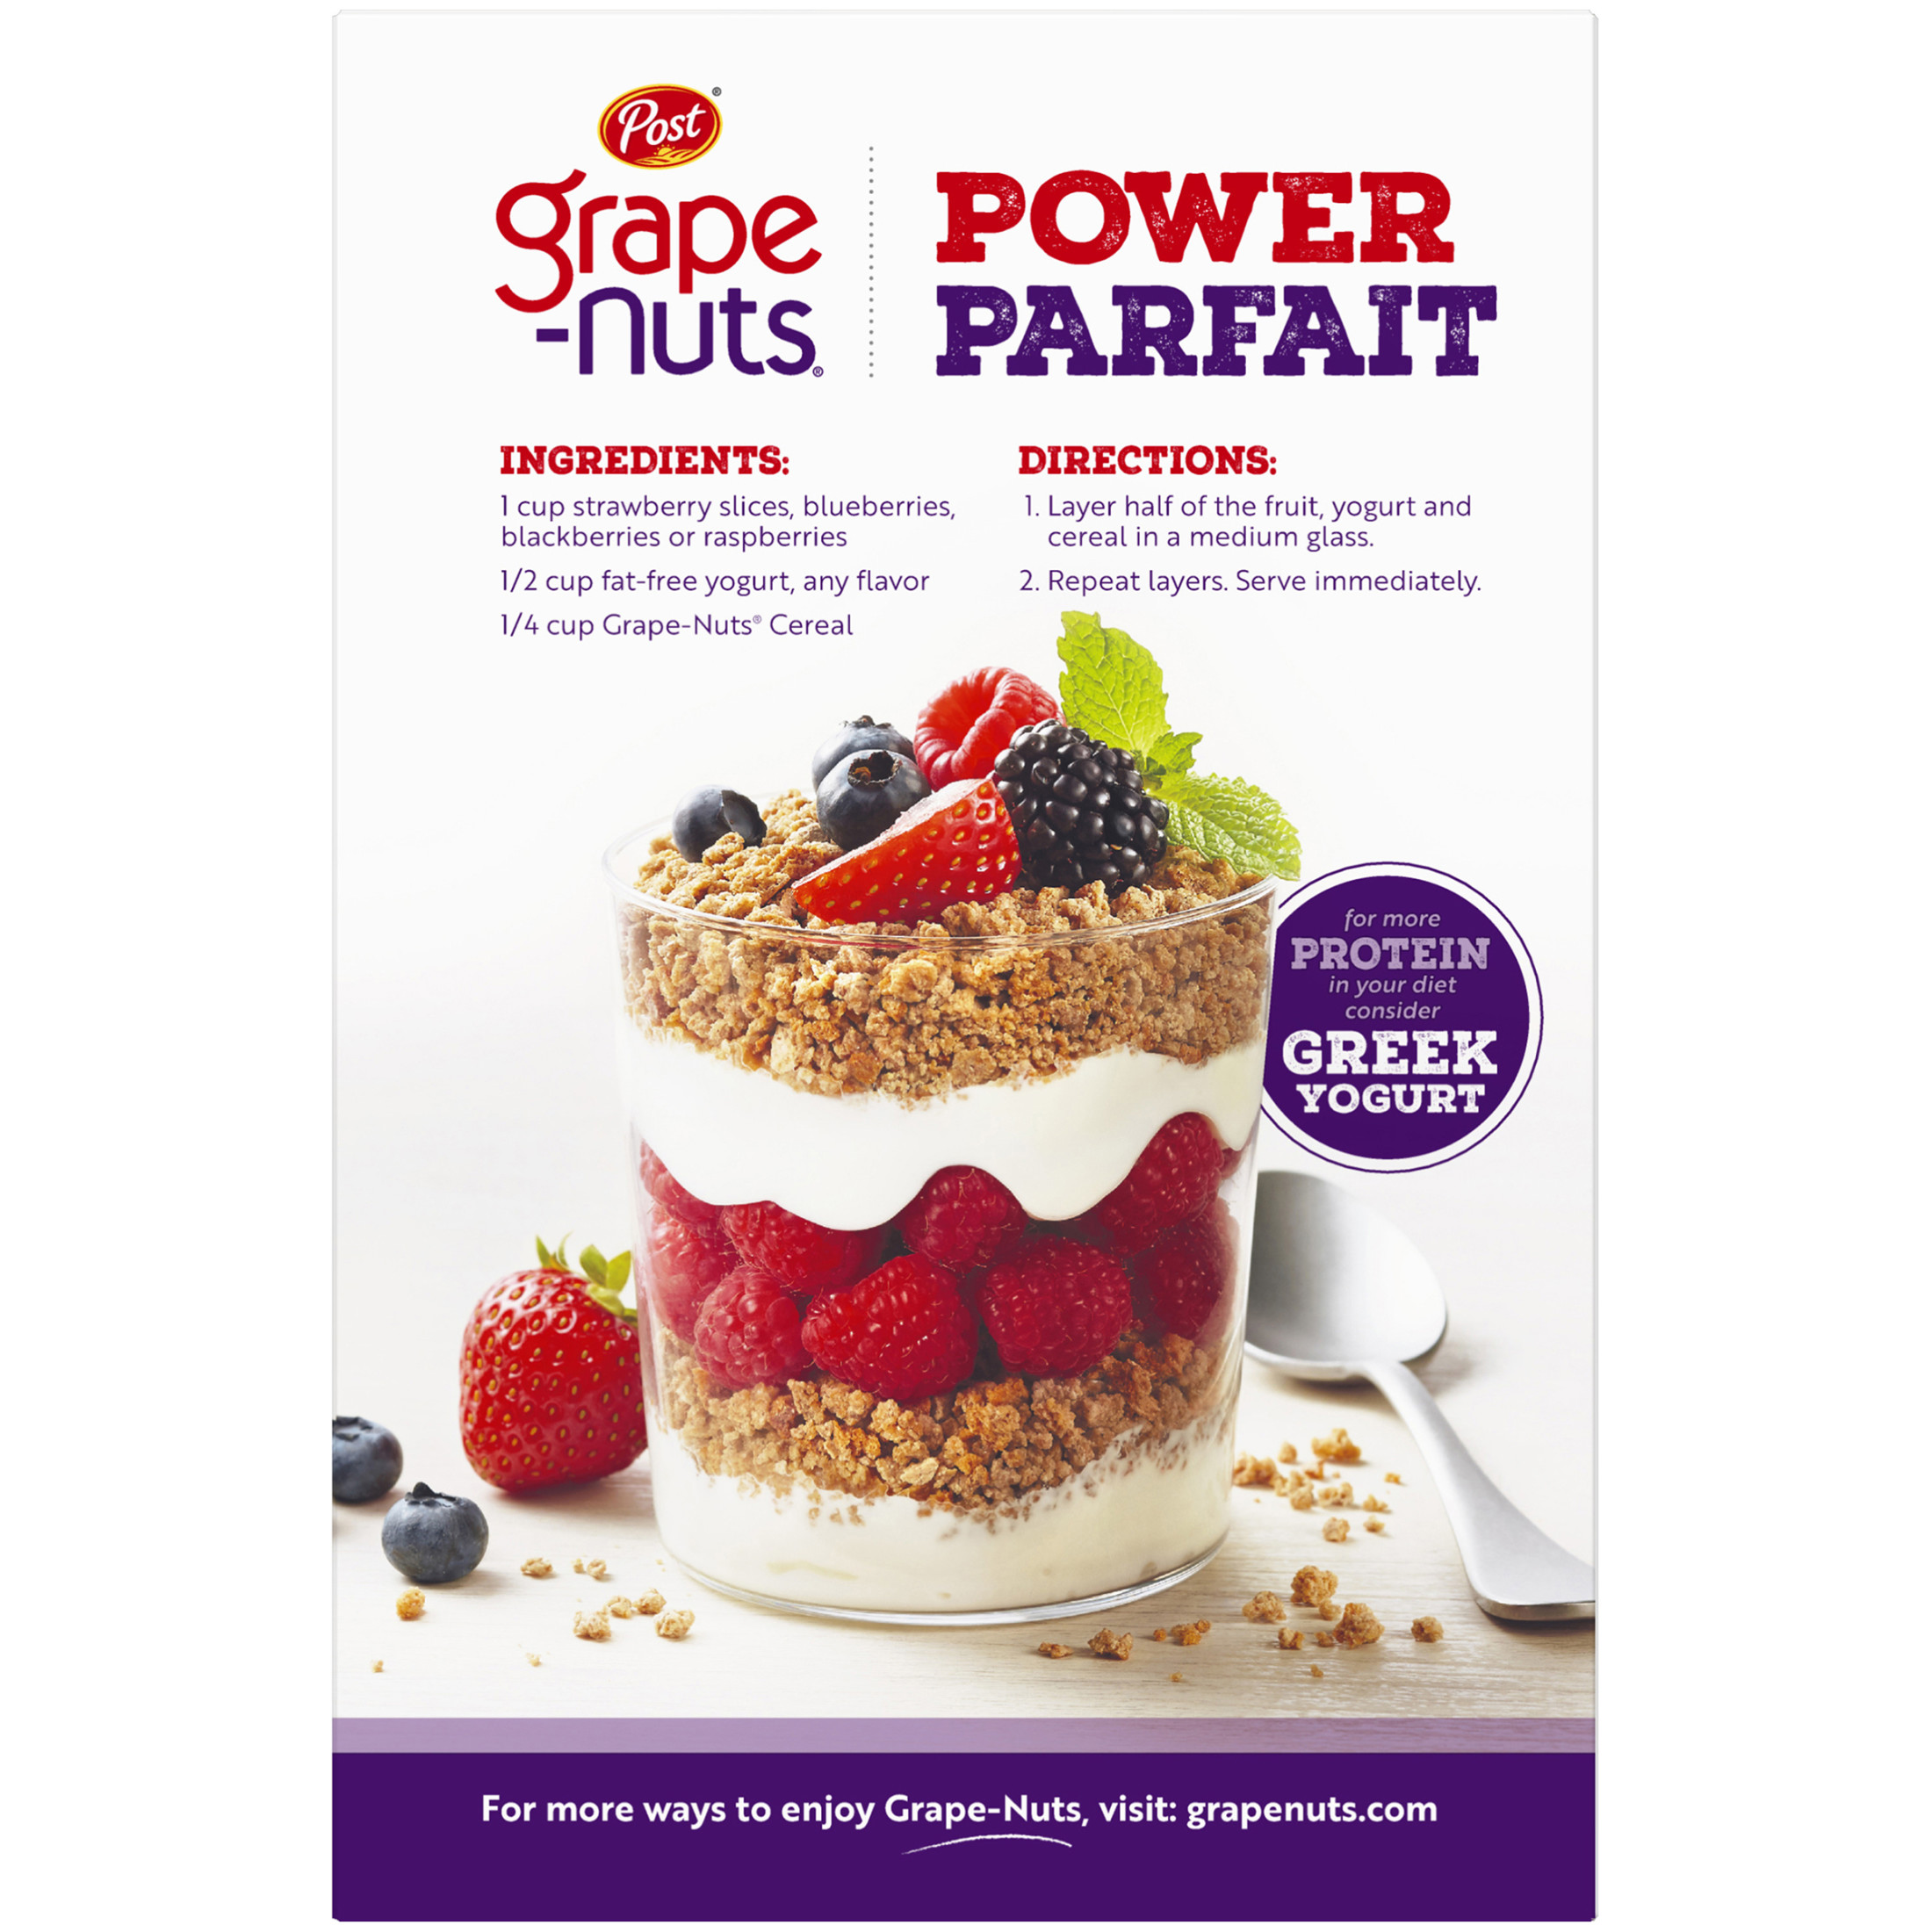 Post Grape Nuts Original Breakfast Cereal, 29 oz Box - image 5 of 5